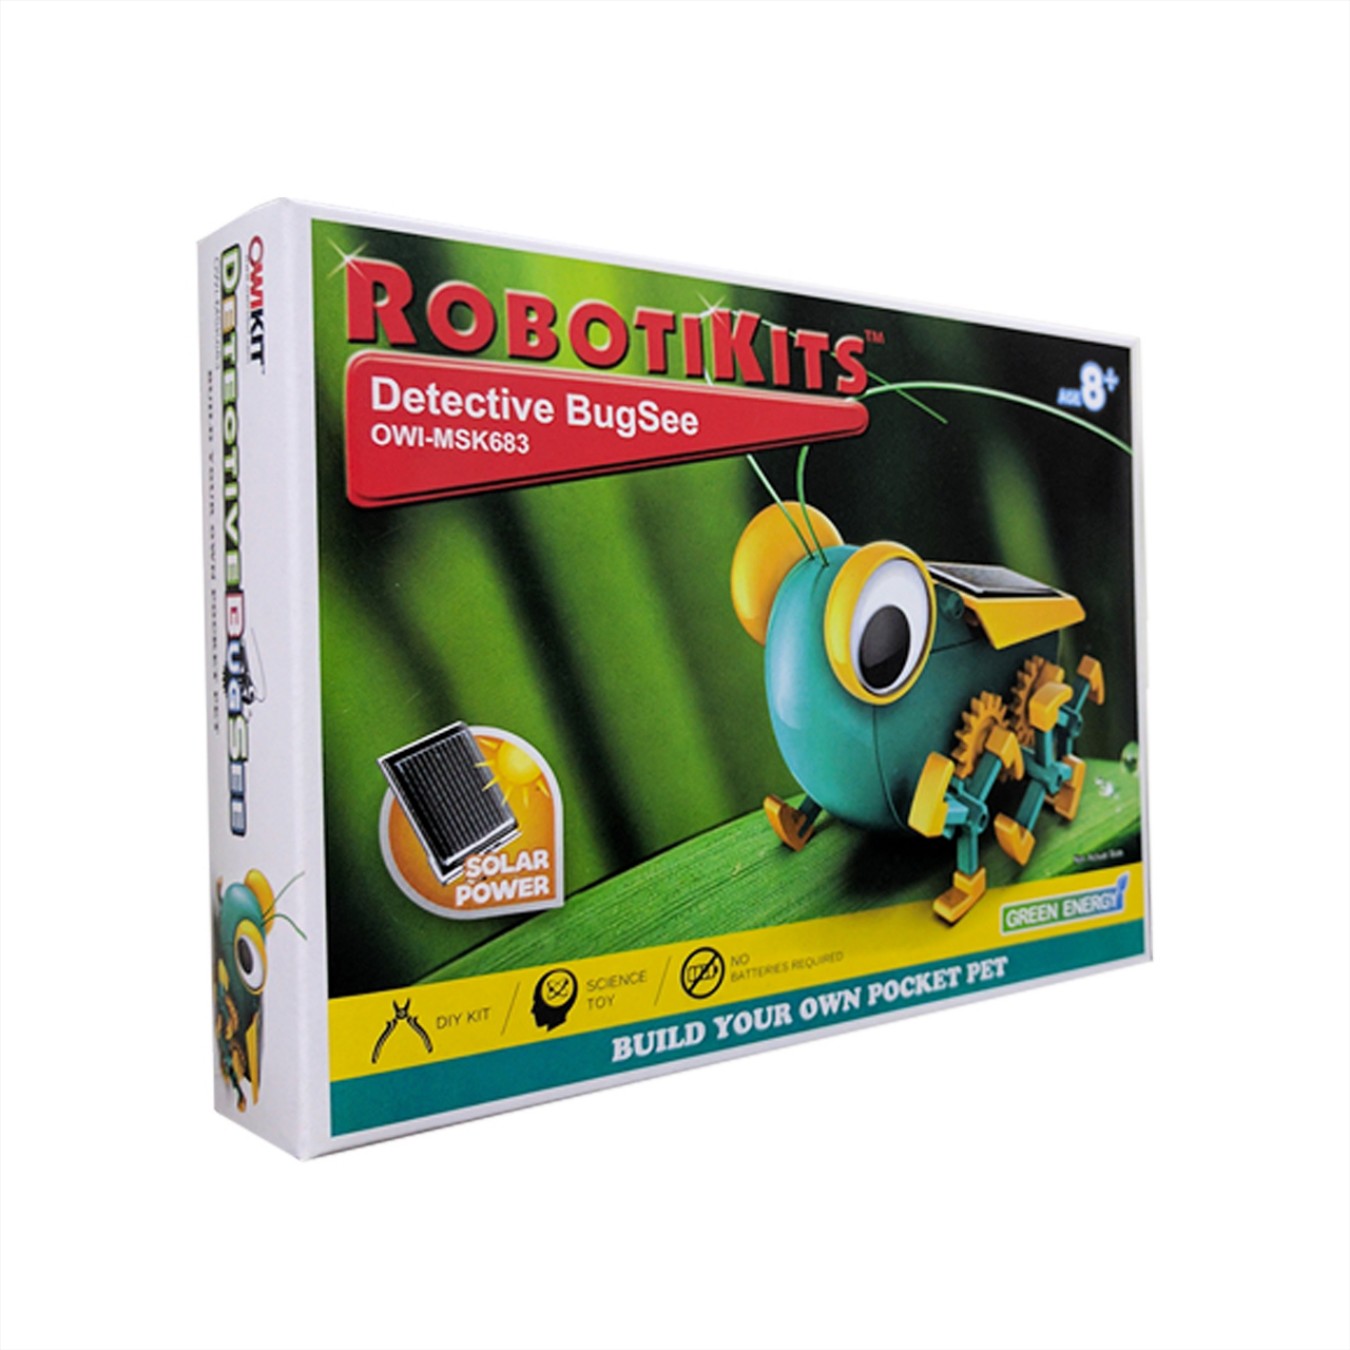 Robotikits: Detective BugSee